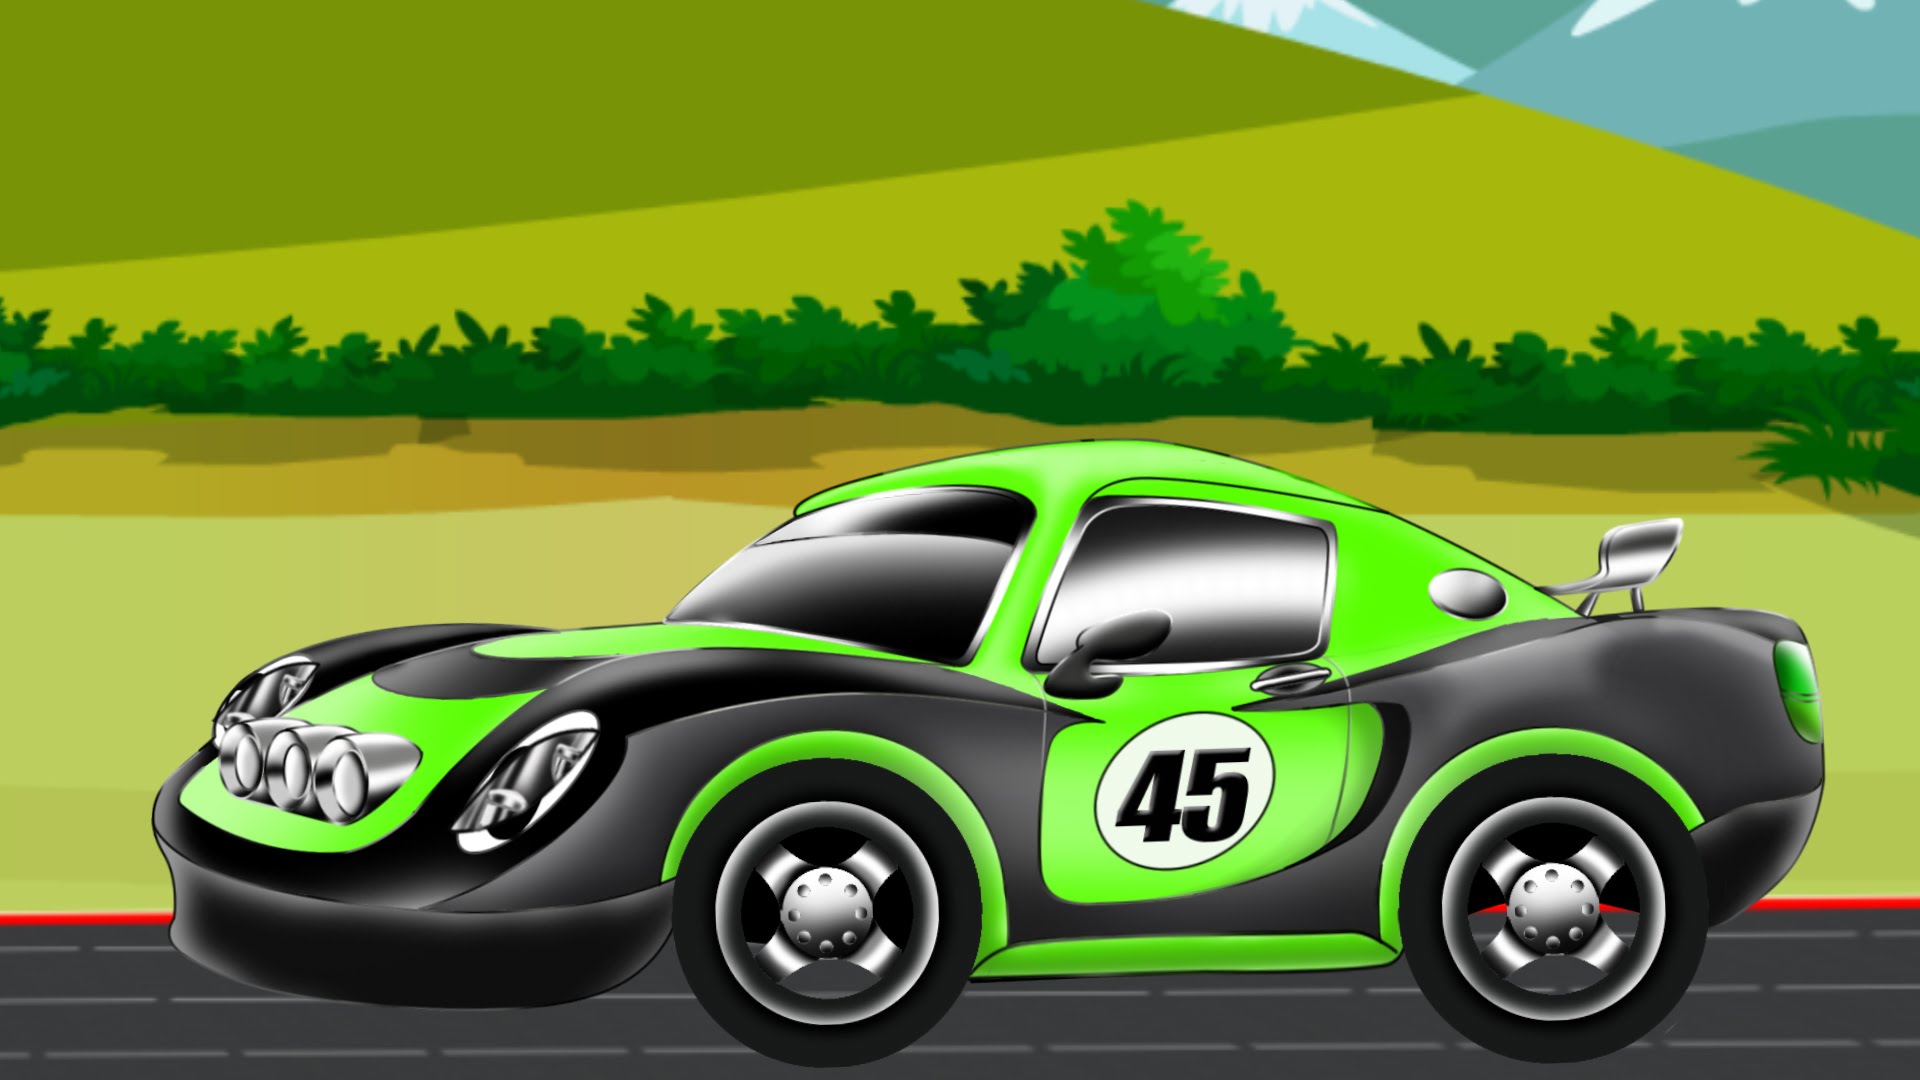 Sports car | Car Race | Racing Cars - YouTube